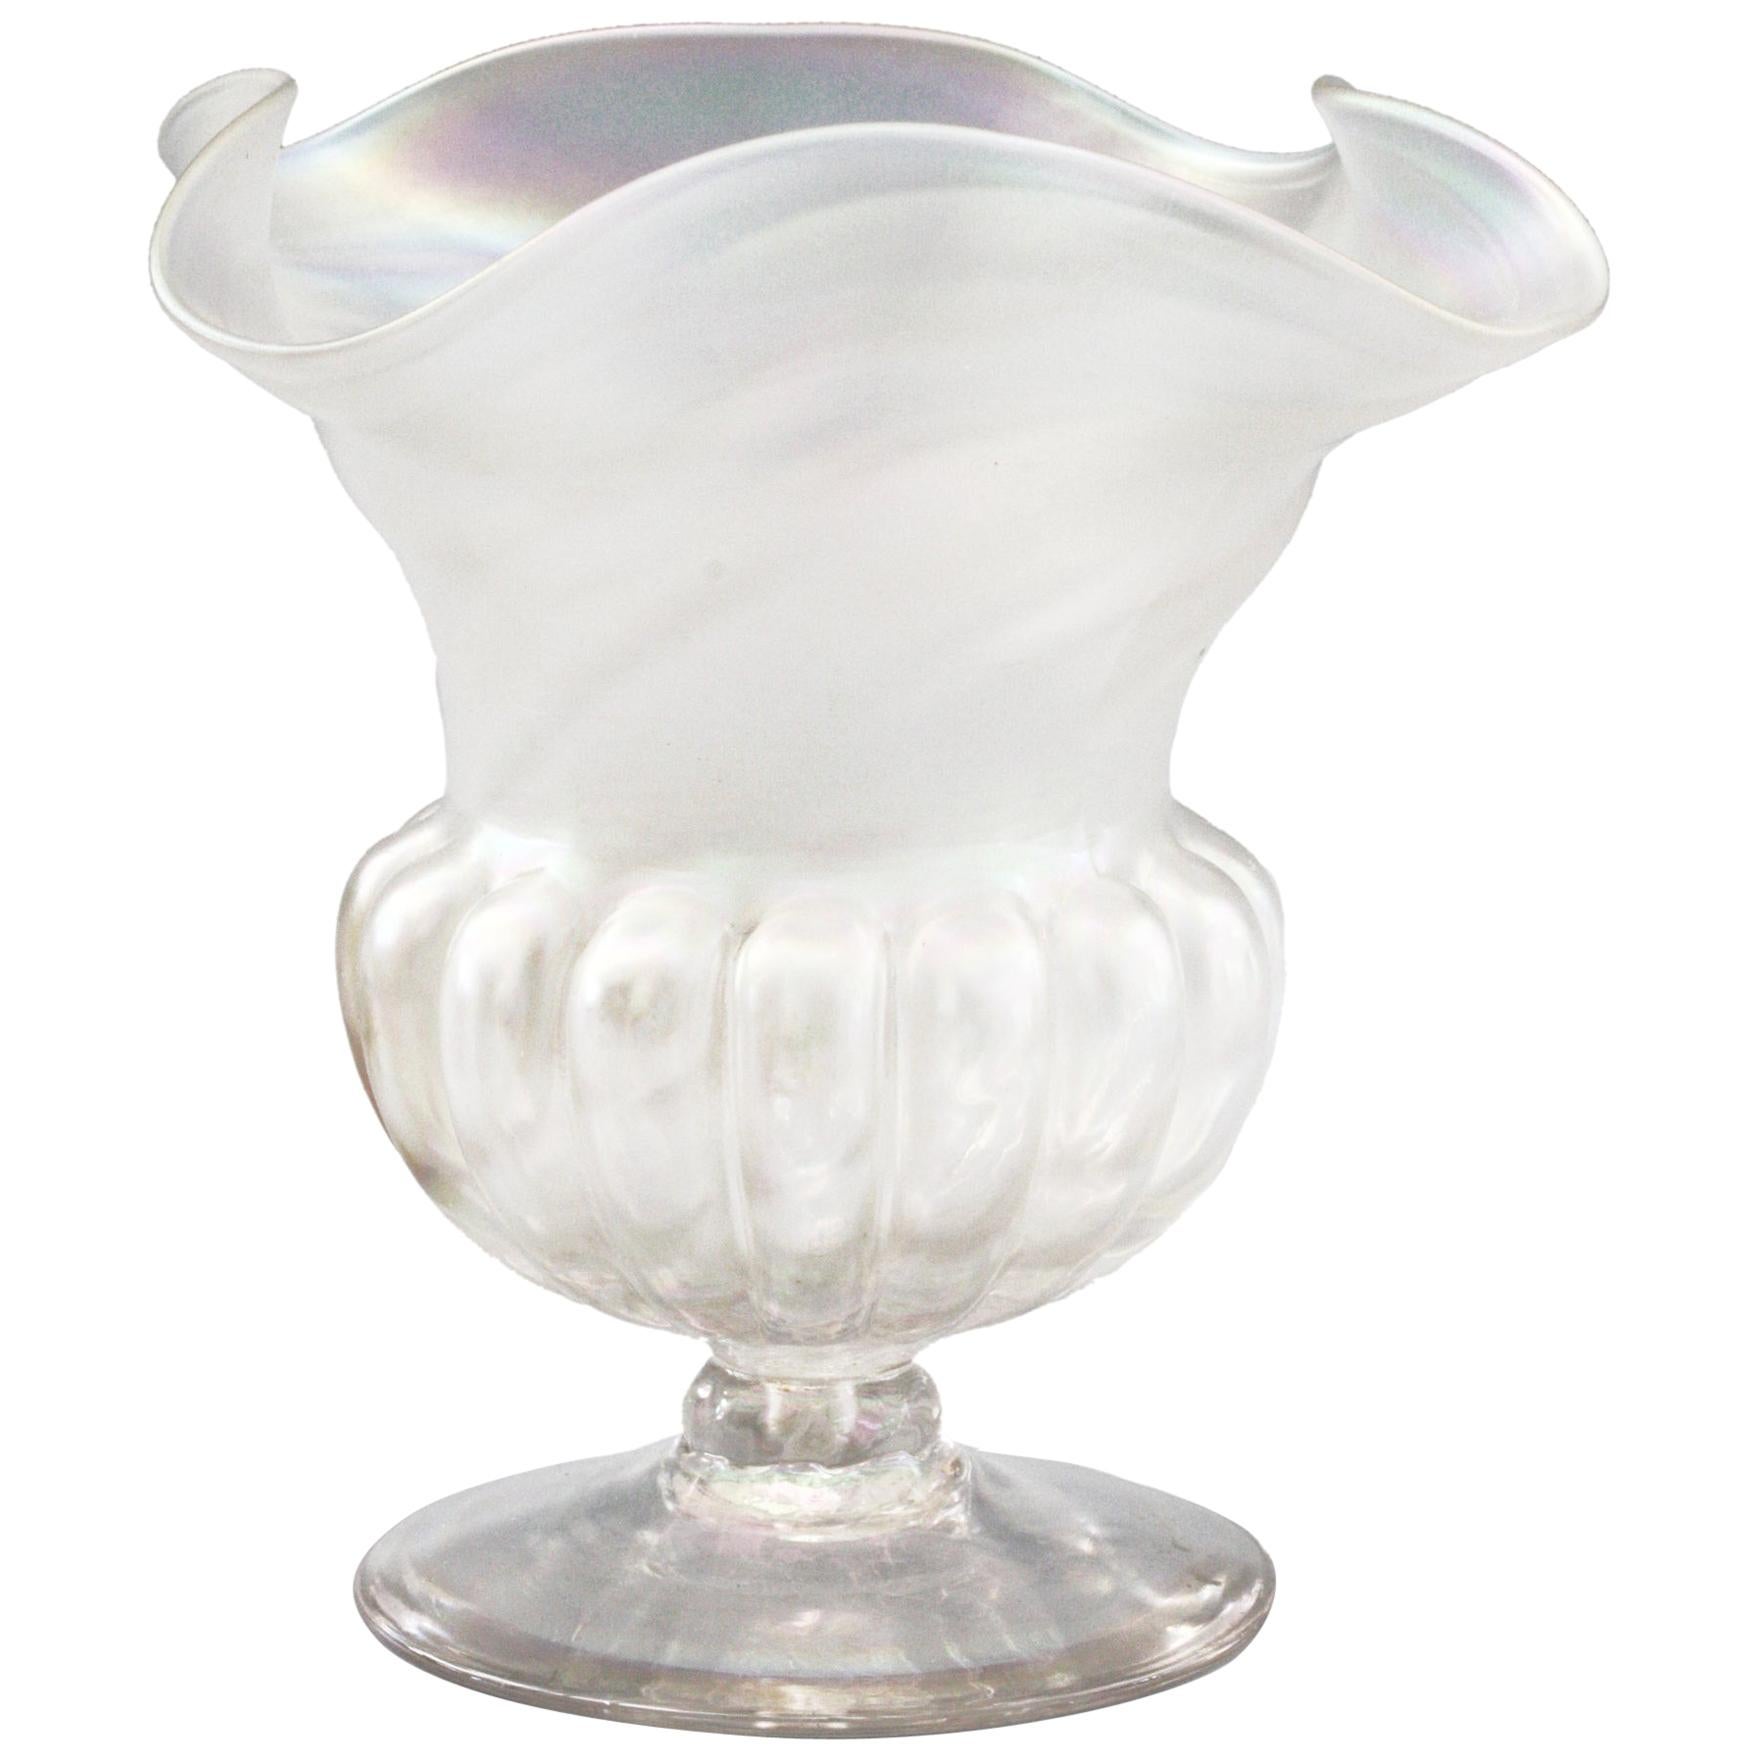 Kralik Art Nouveau Irisdescent Glass Flower Head Pedestal Vase